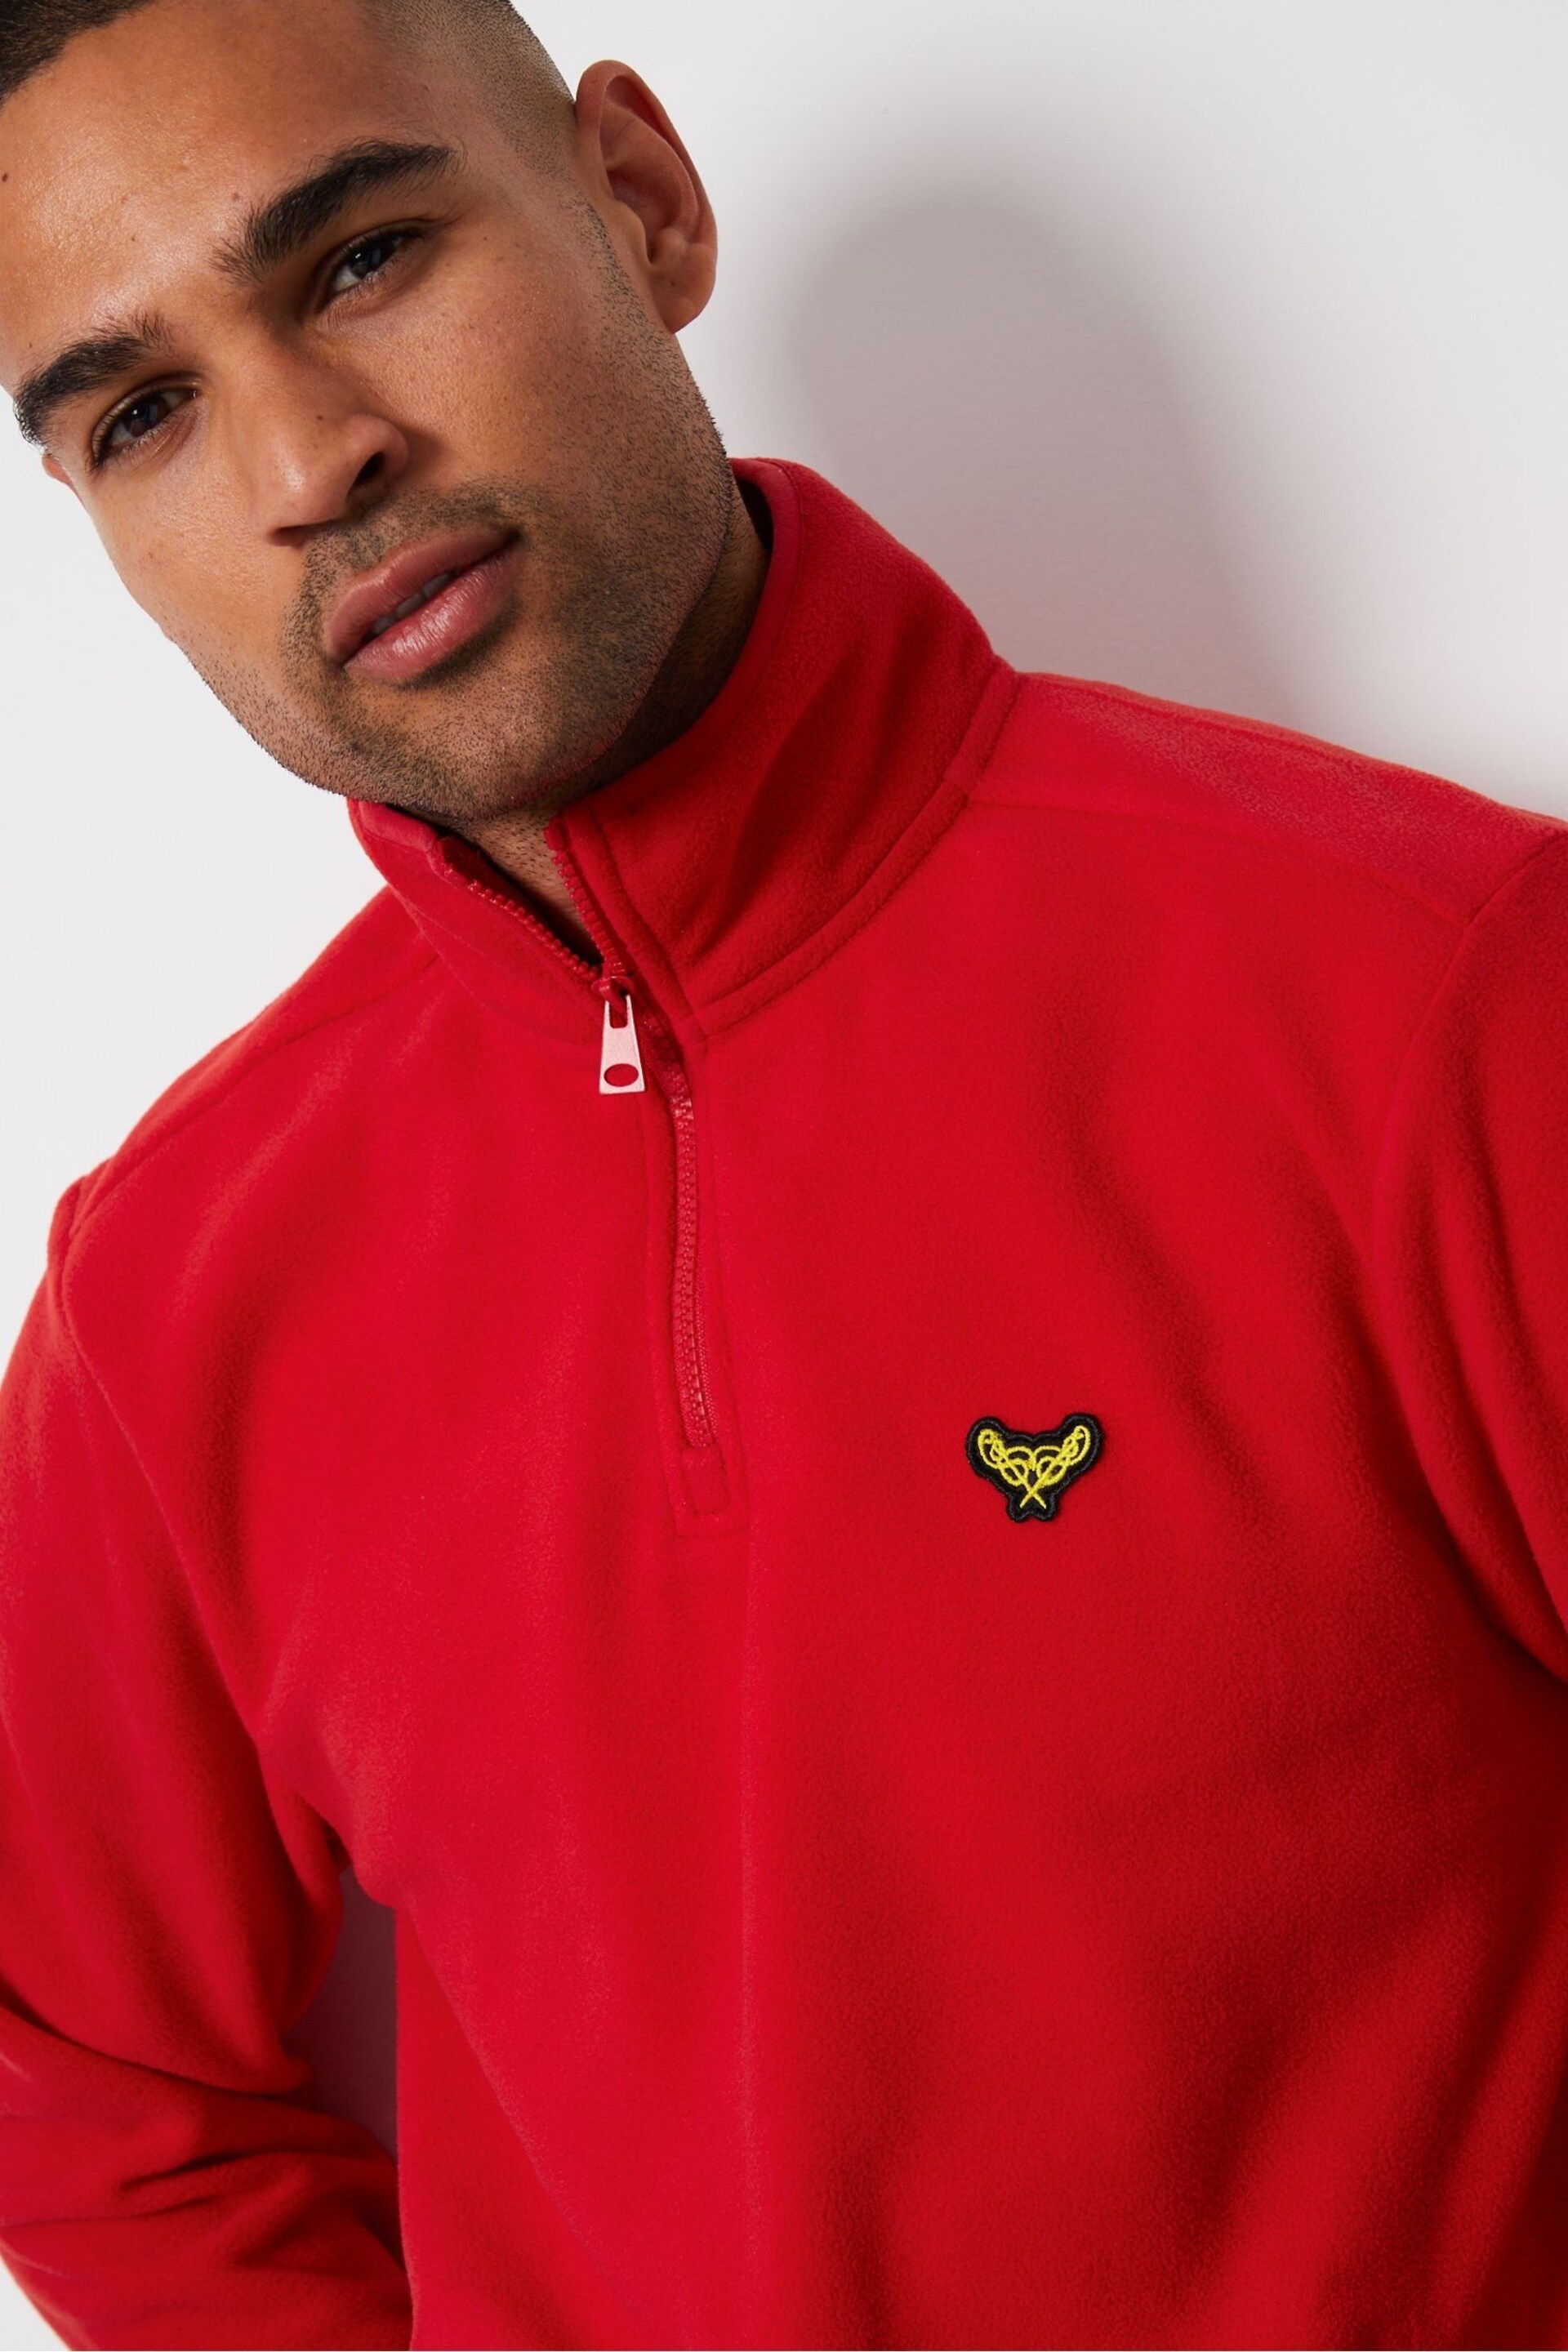 Threadbare Red 1/4 Zip Fleece Sweatshirt - Image 4 of 4